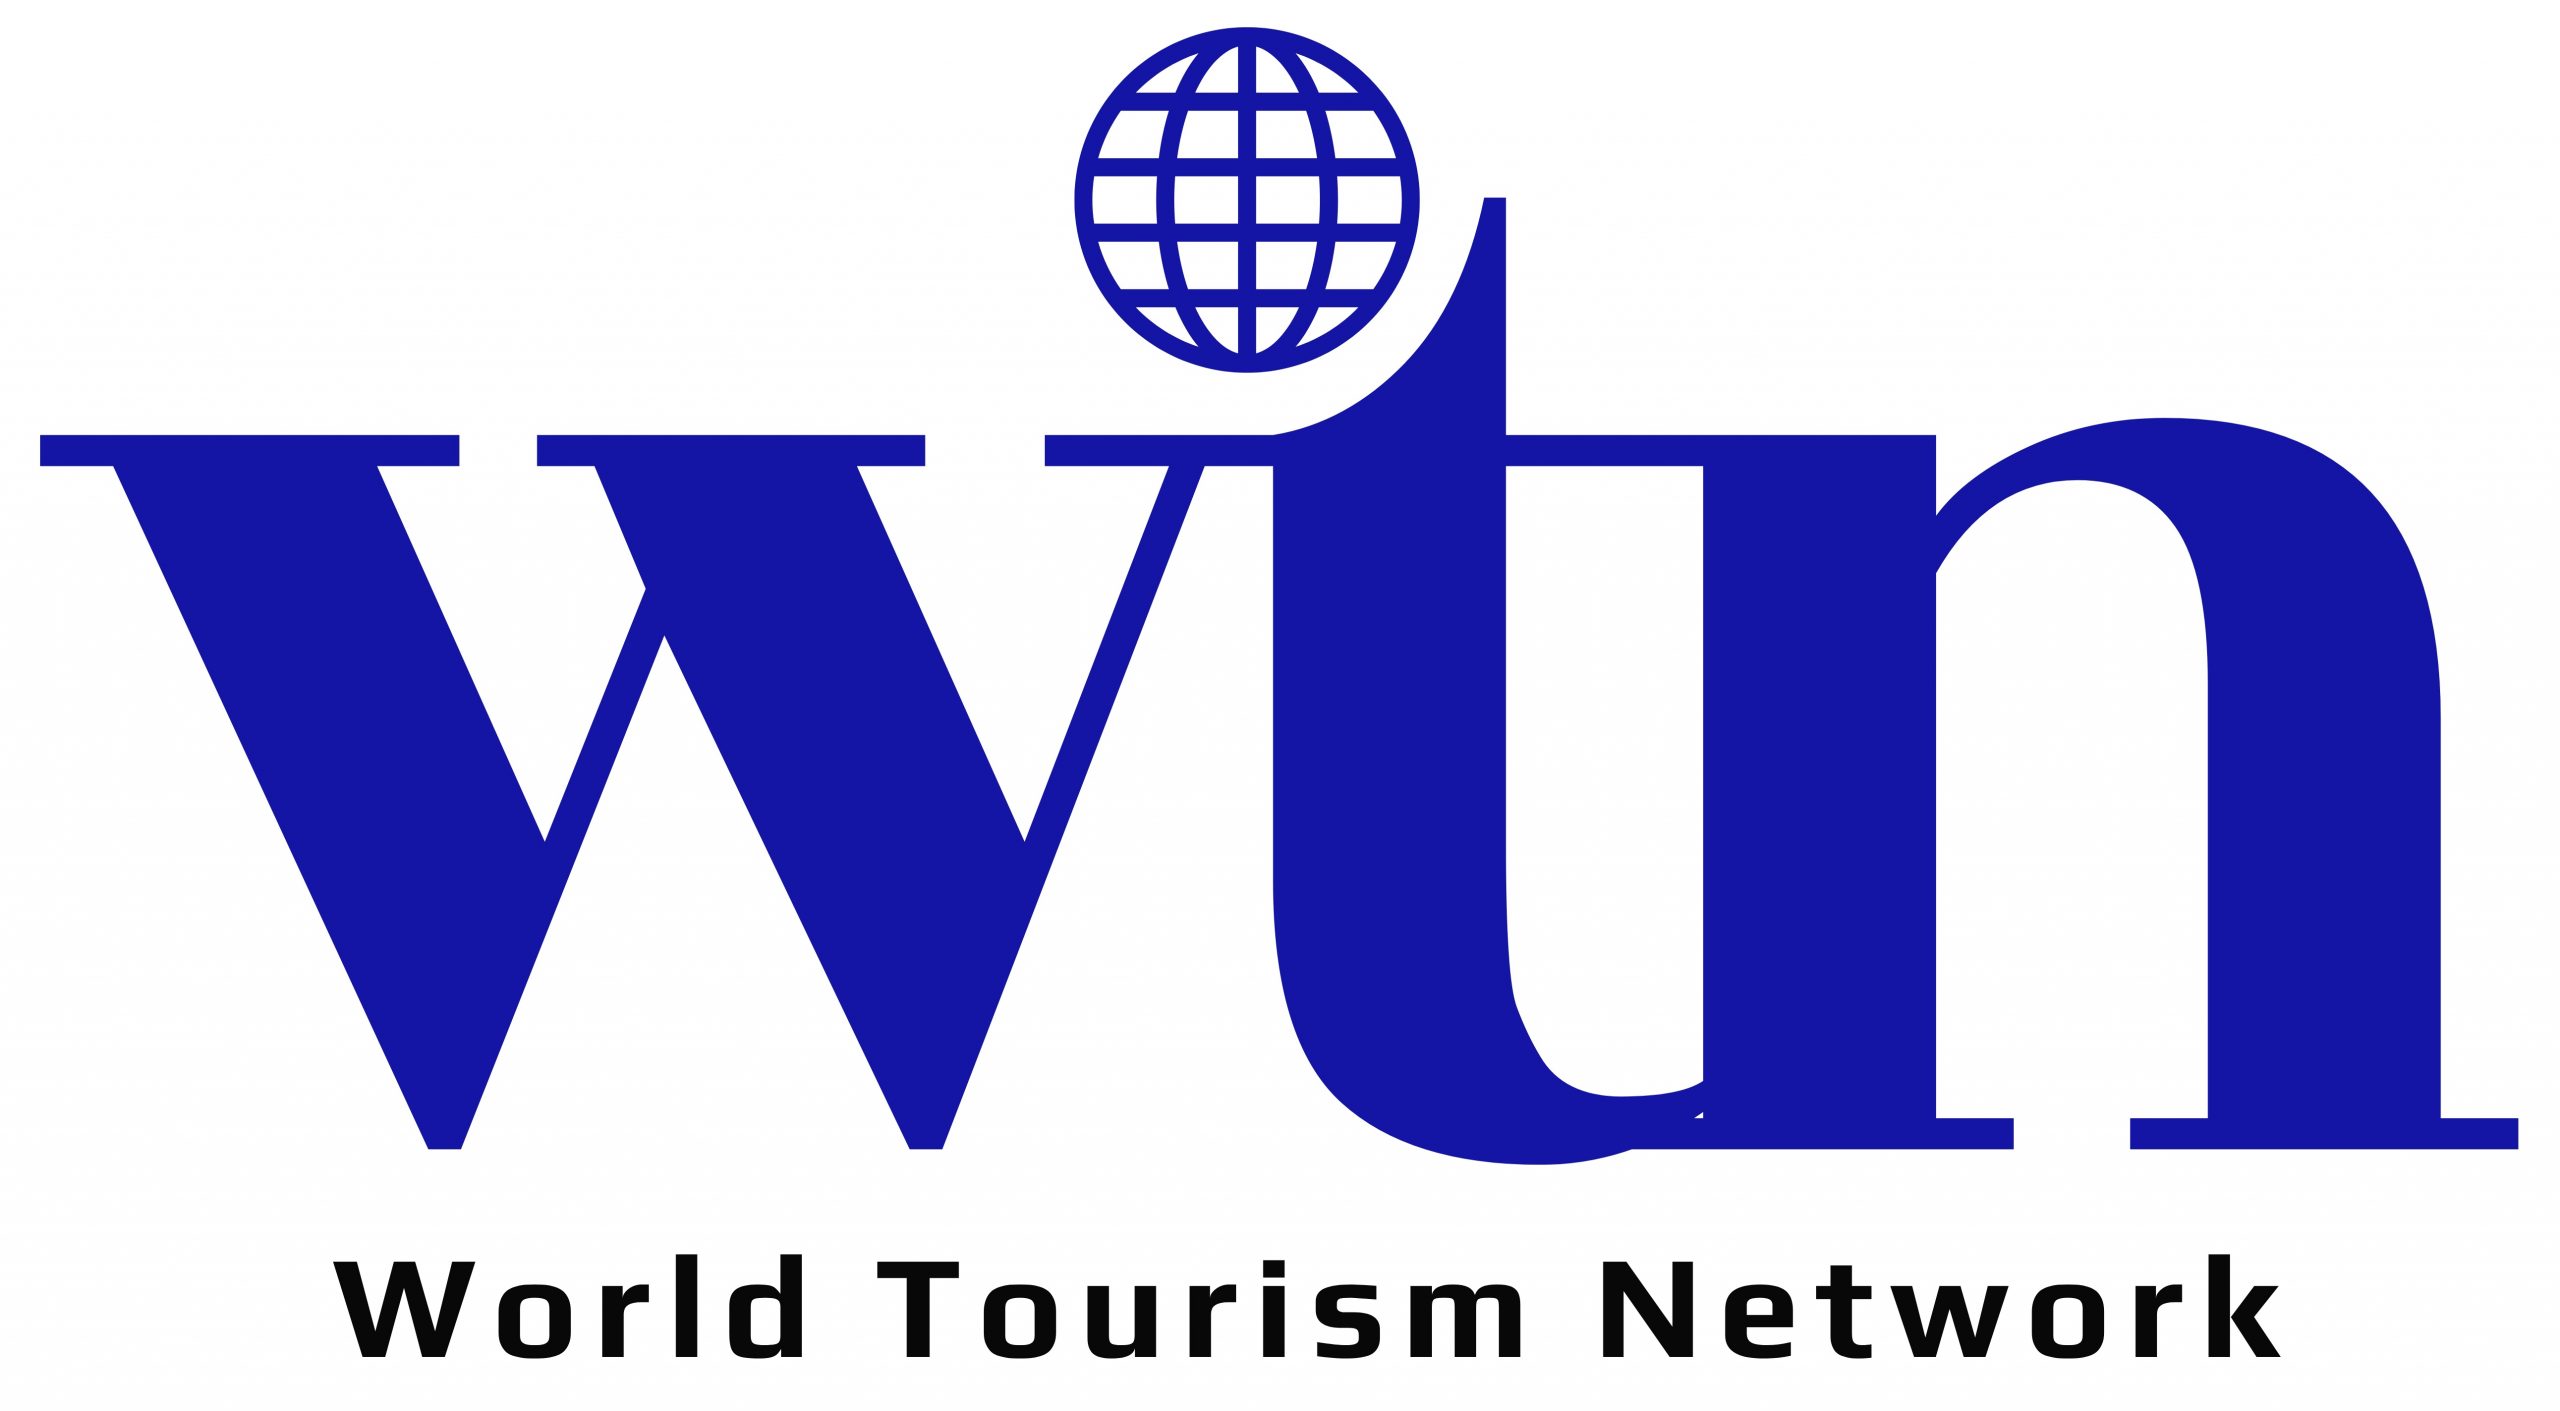 World Tourism Network